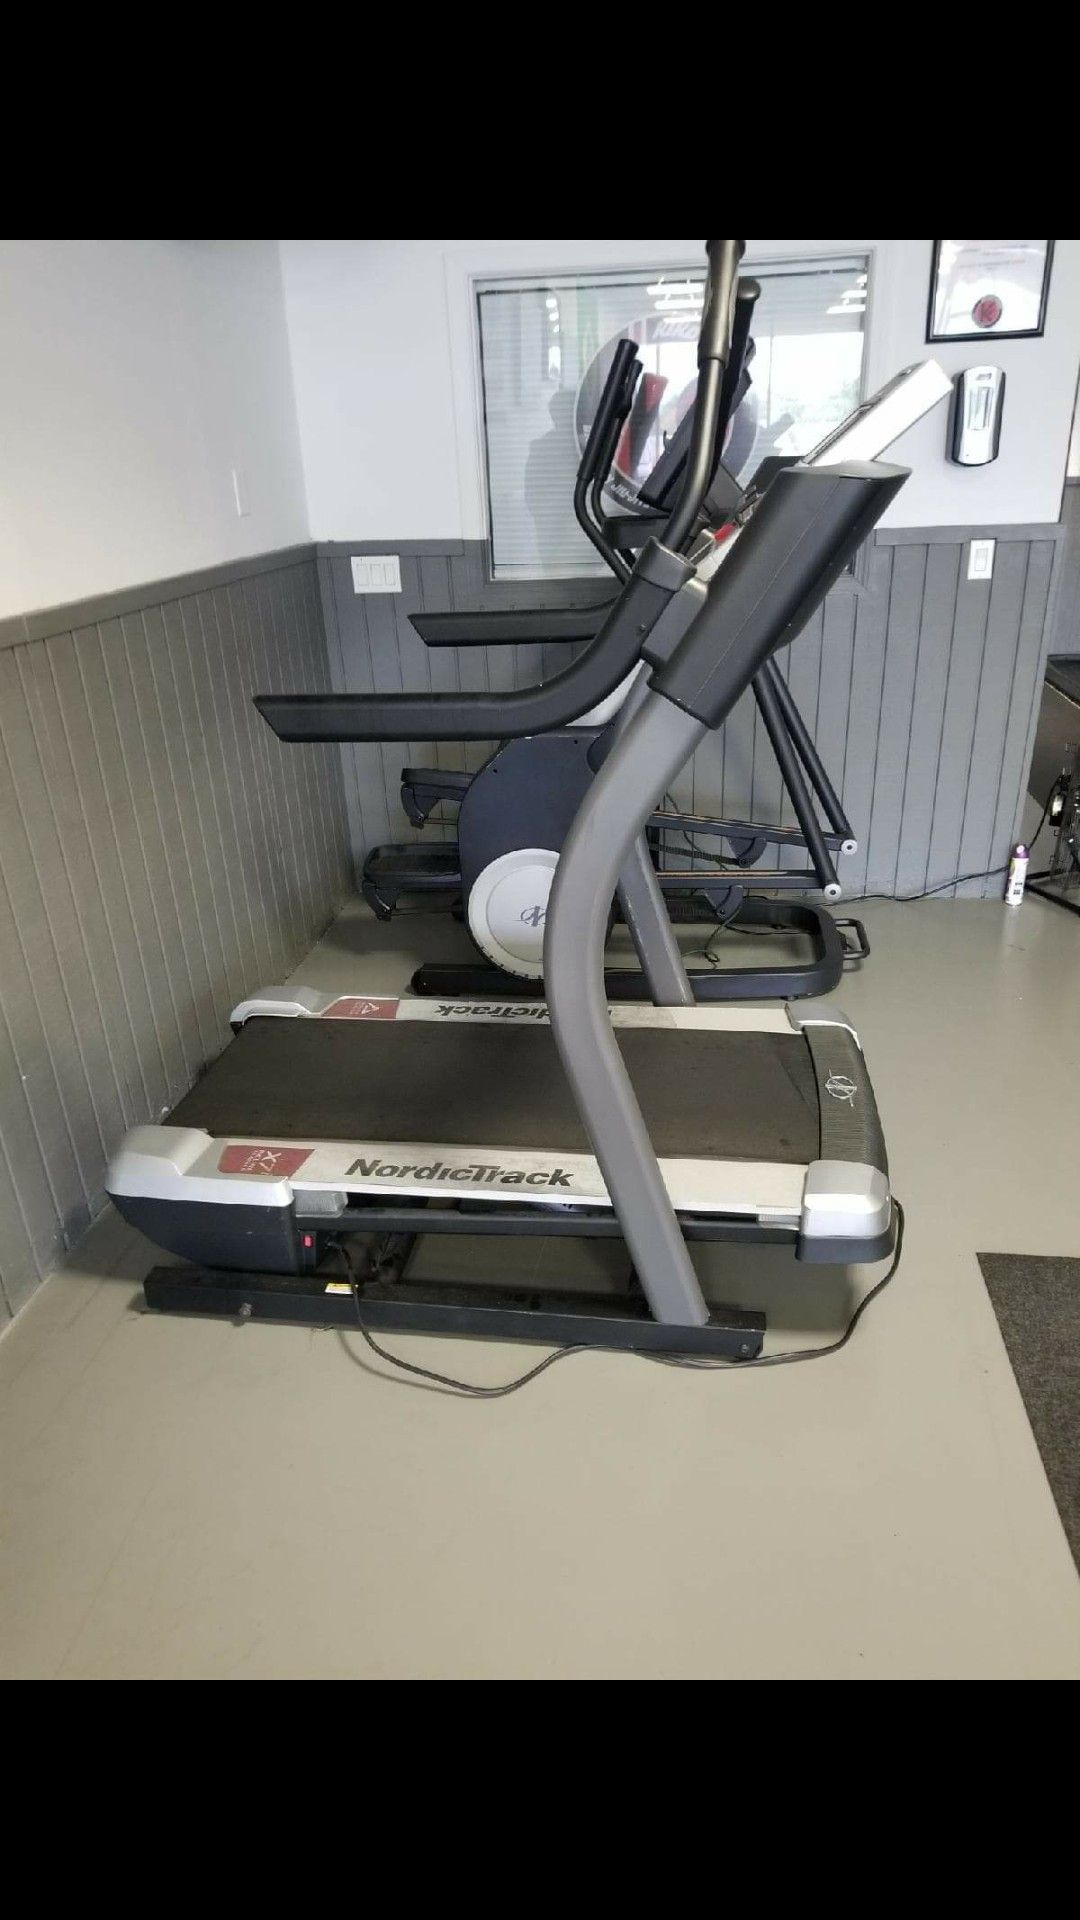 Nordictrack treadmill and elliptical